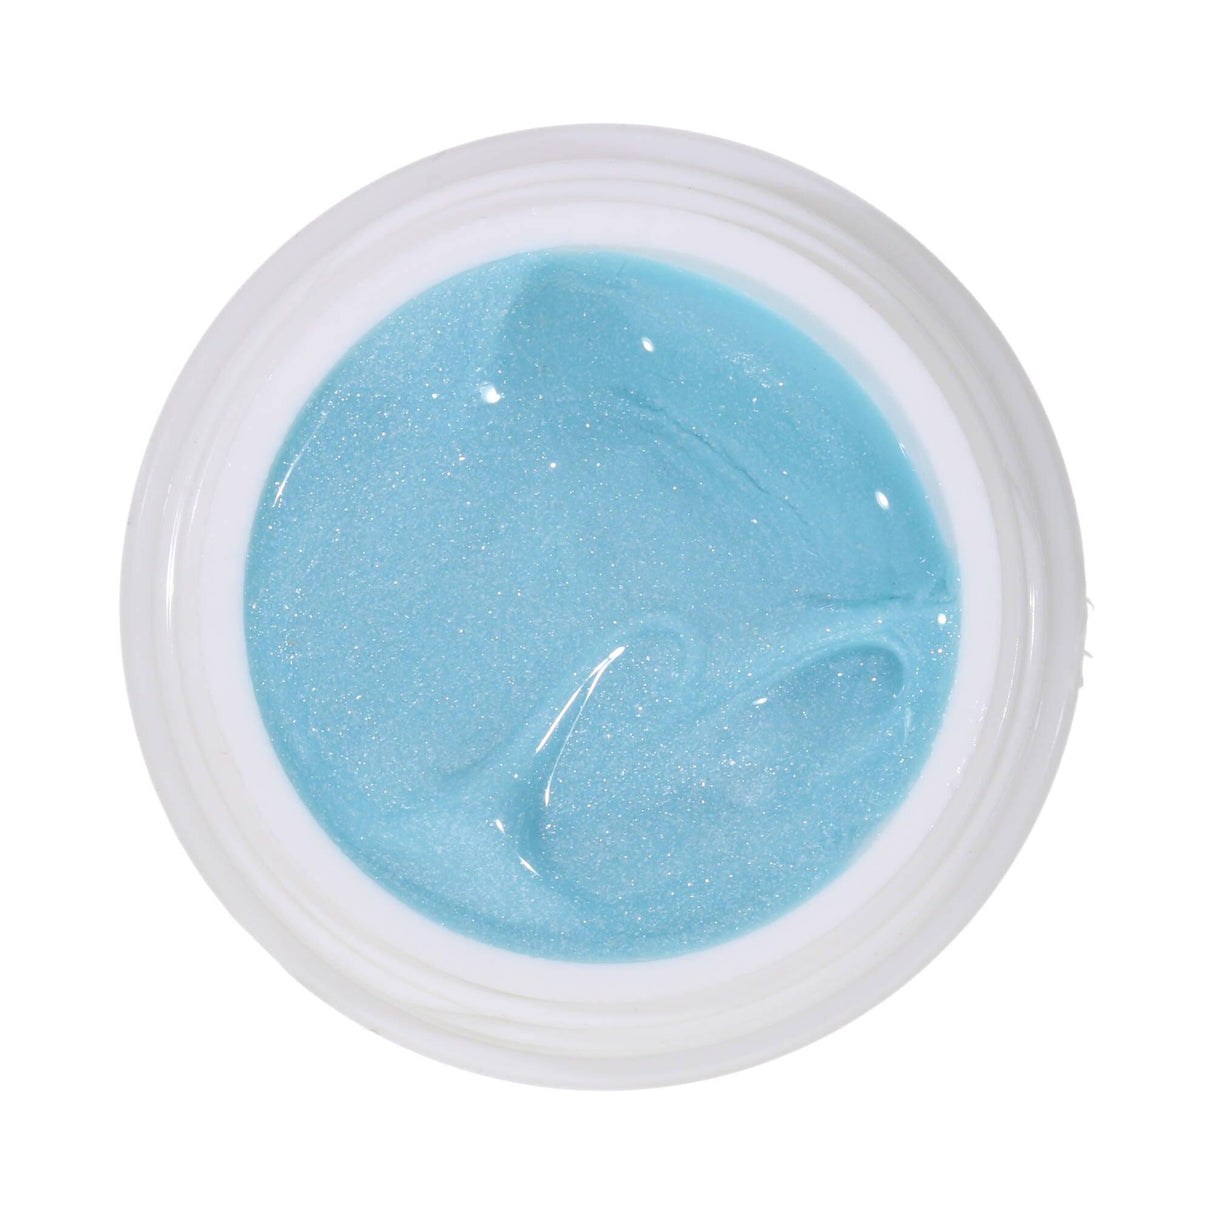 #014 Premium-EFFEKT Color Gel 5ml Mintgrün mit feinem Silberperlglanz - MSE - The Beauty Company